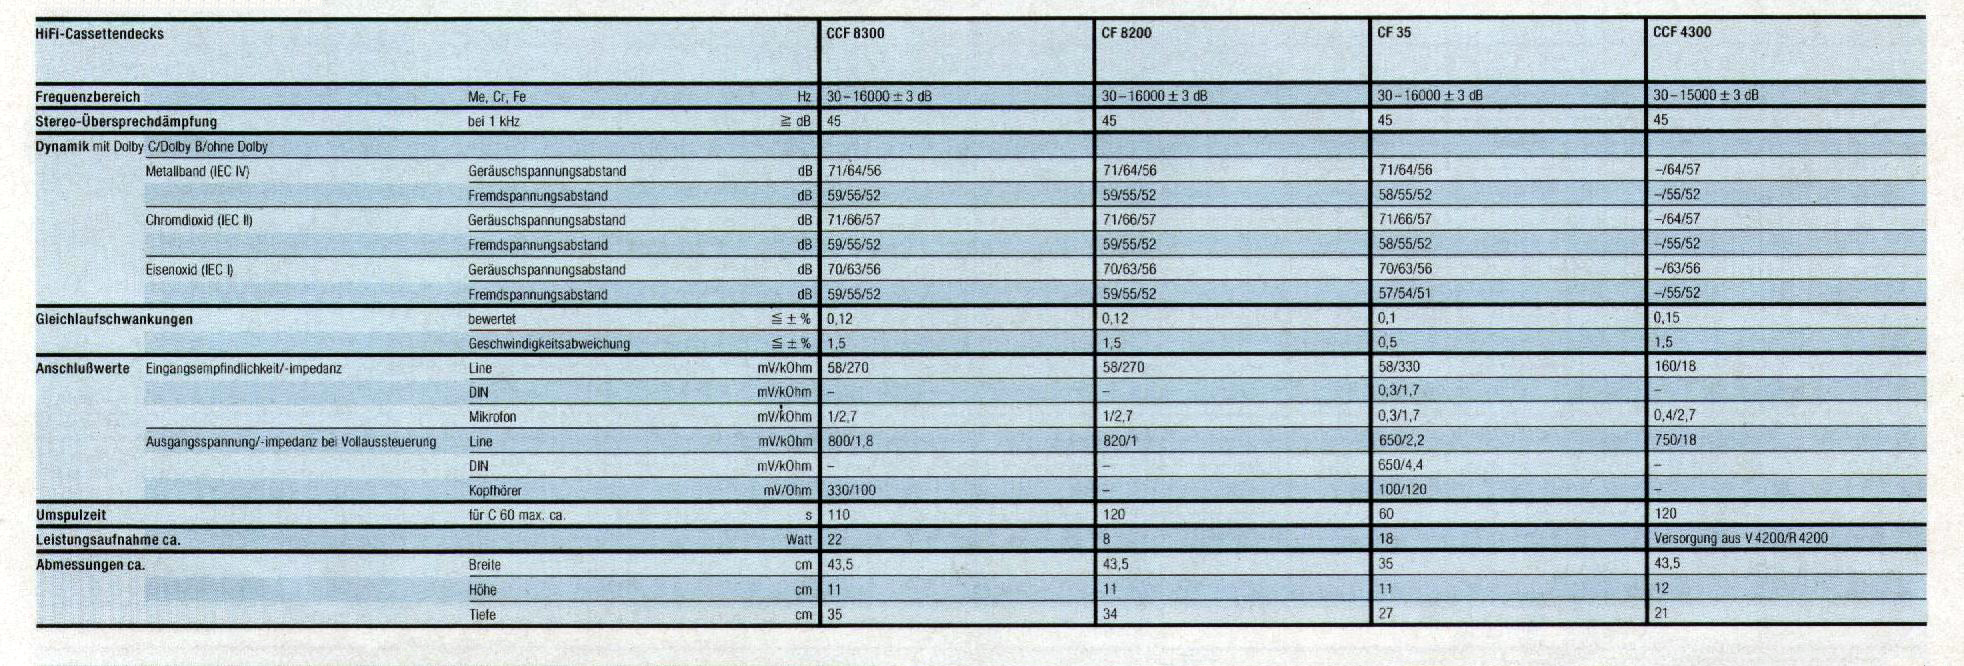 Grundig Tape-Daten-1987.jpg